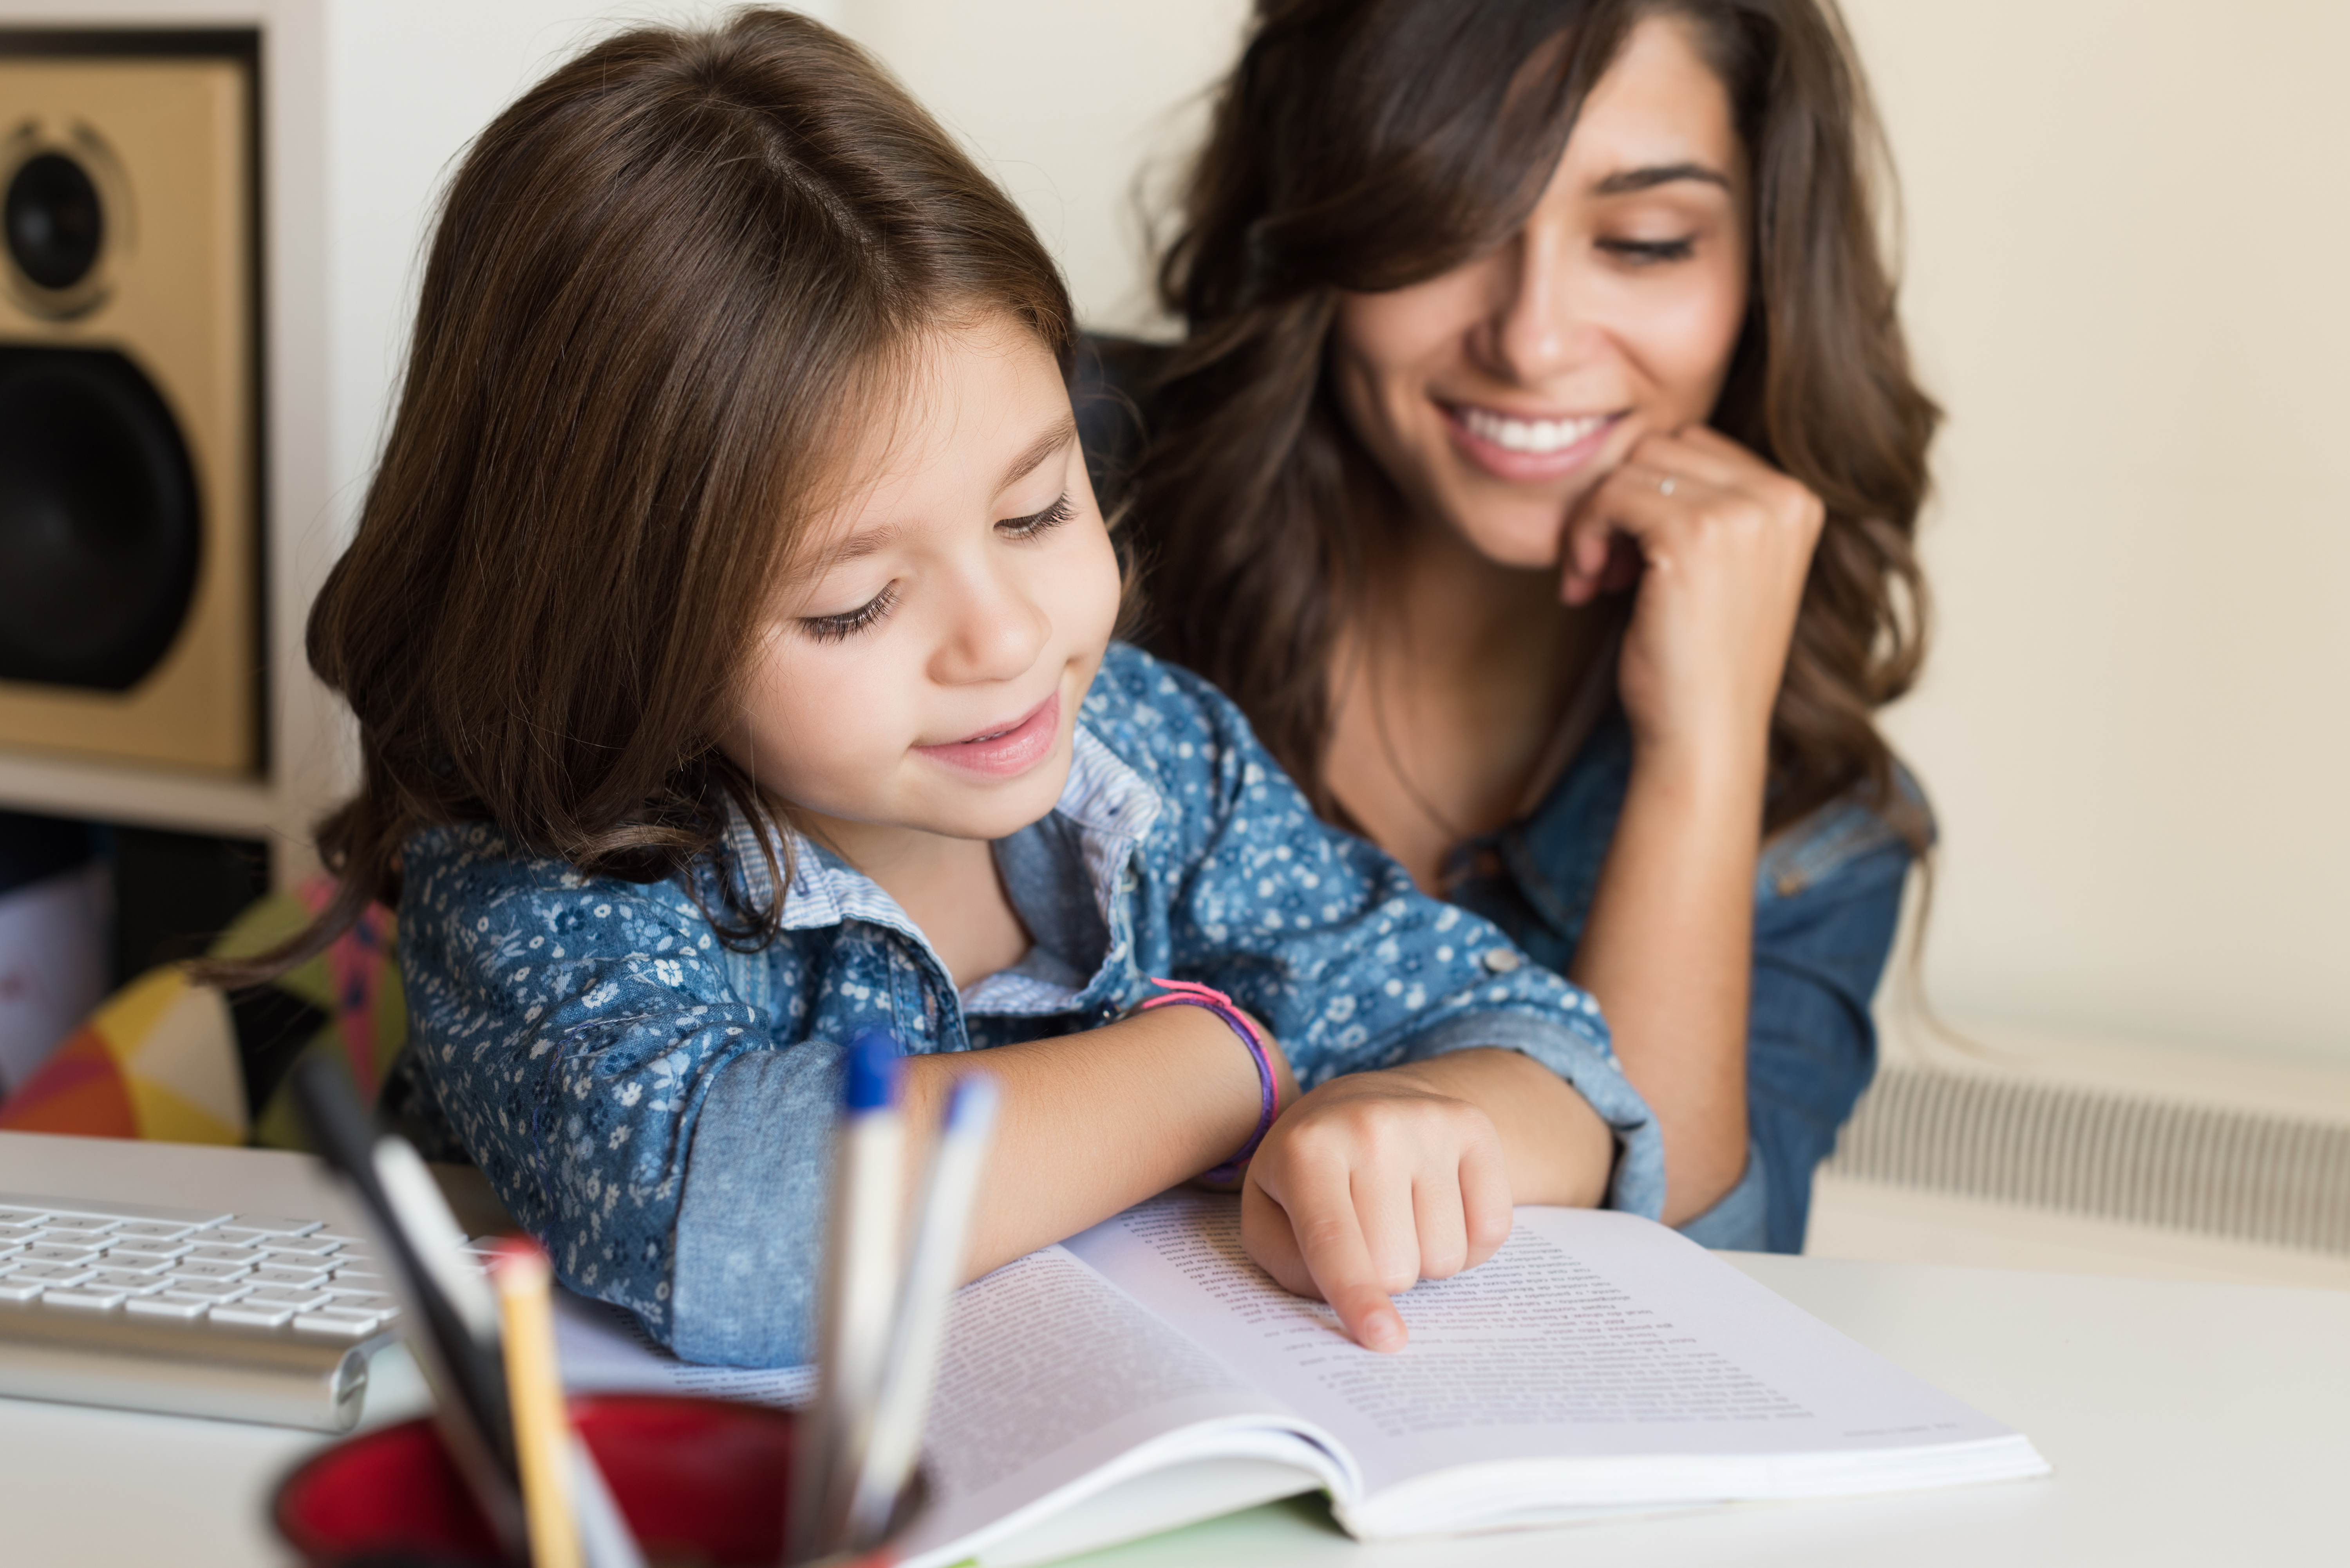 Should Parents Help Kids With Their Homework? | Teach 4 the Heart